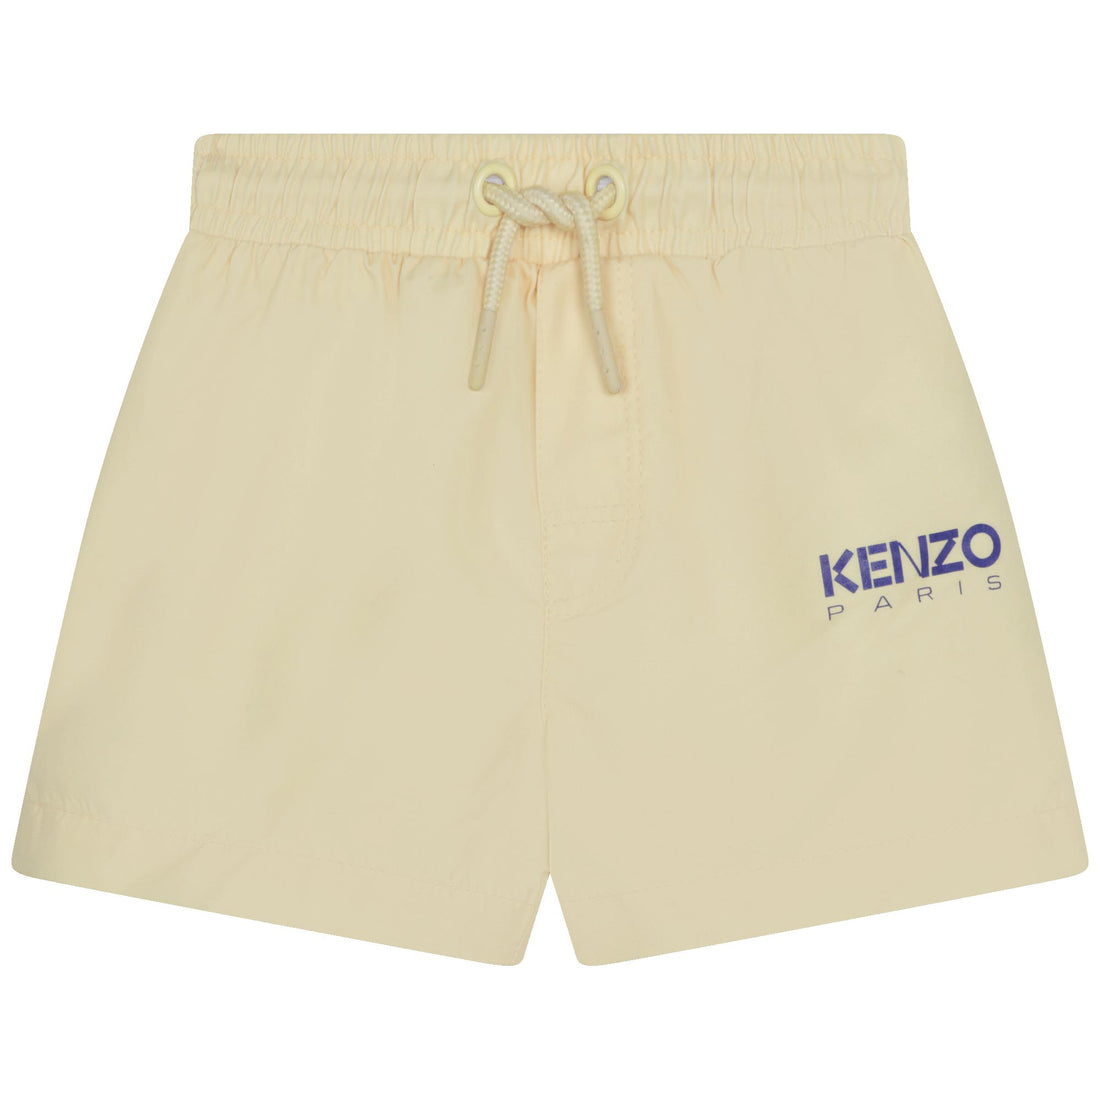 Kenzo Swimming Short Style: K00036